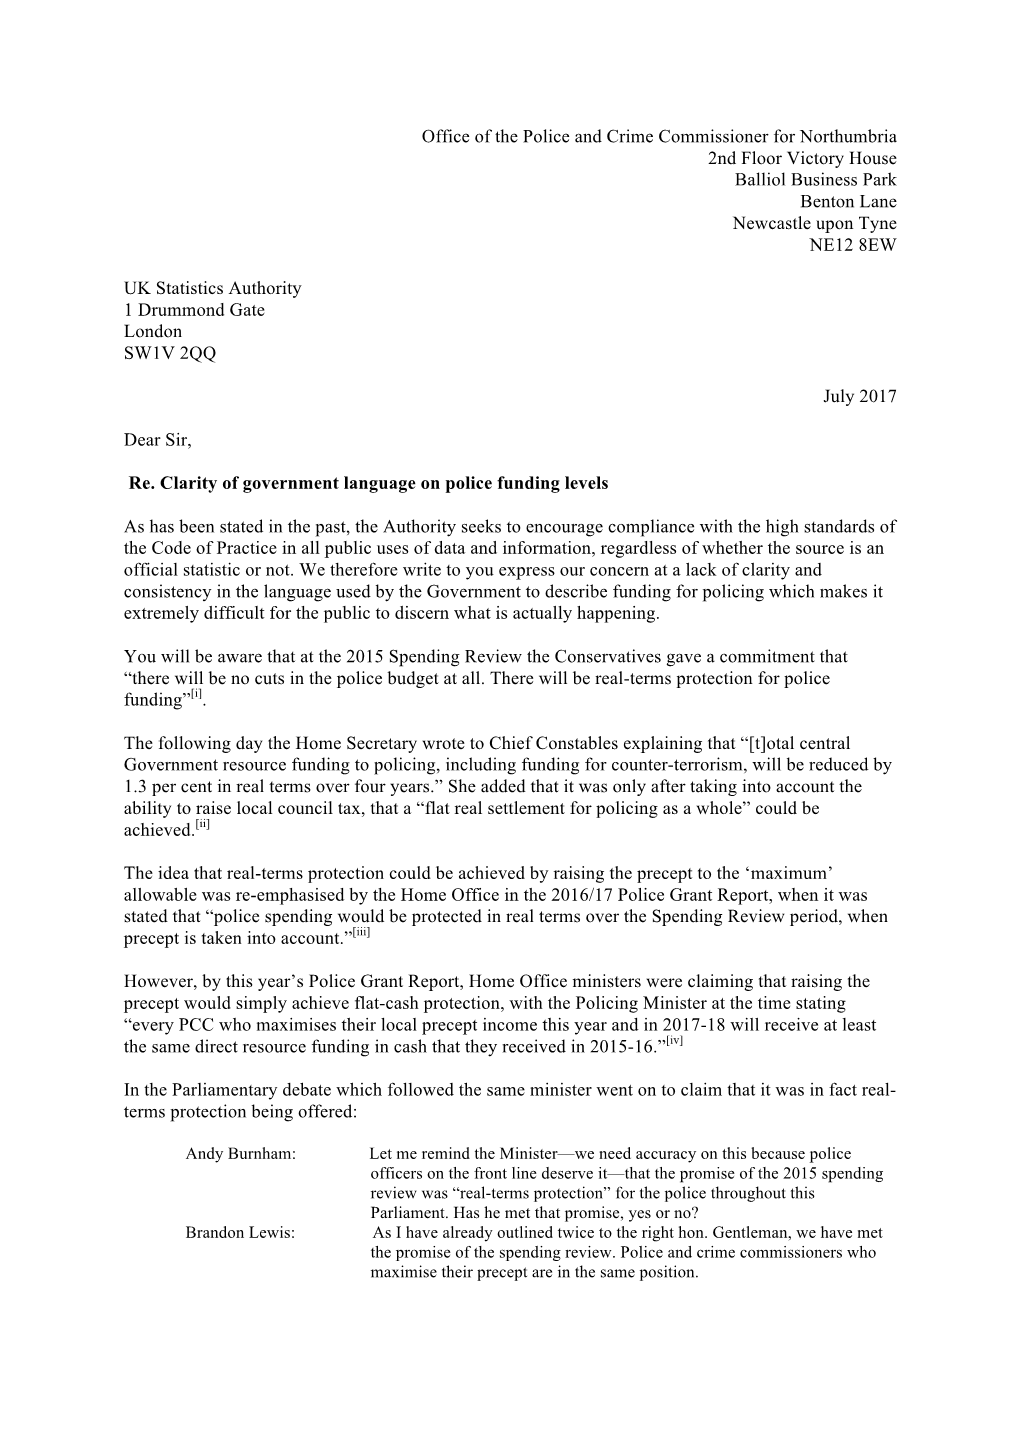 Letter to UKSA on Police Spending Figures